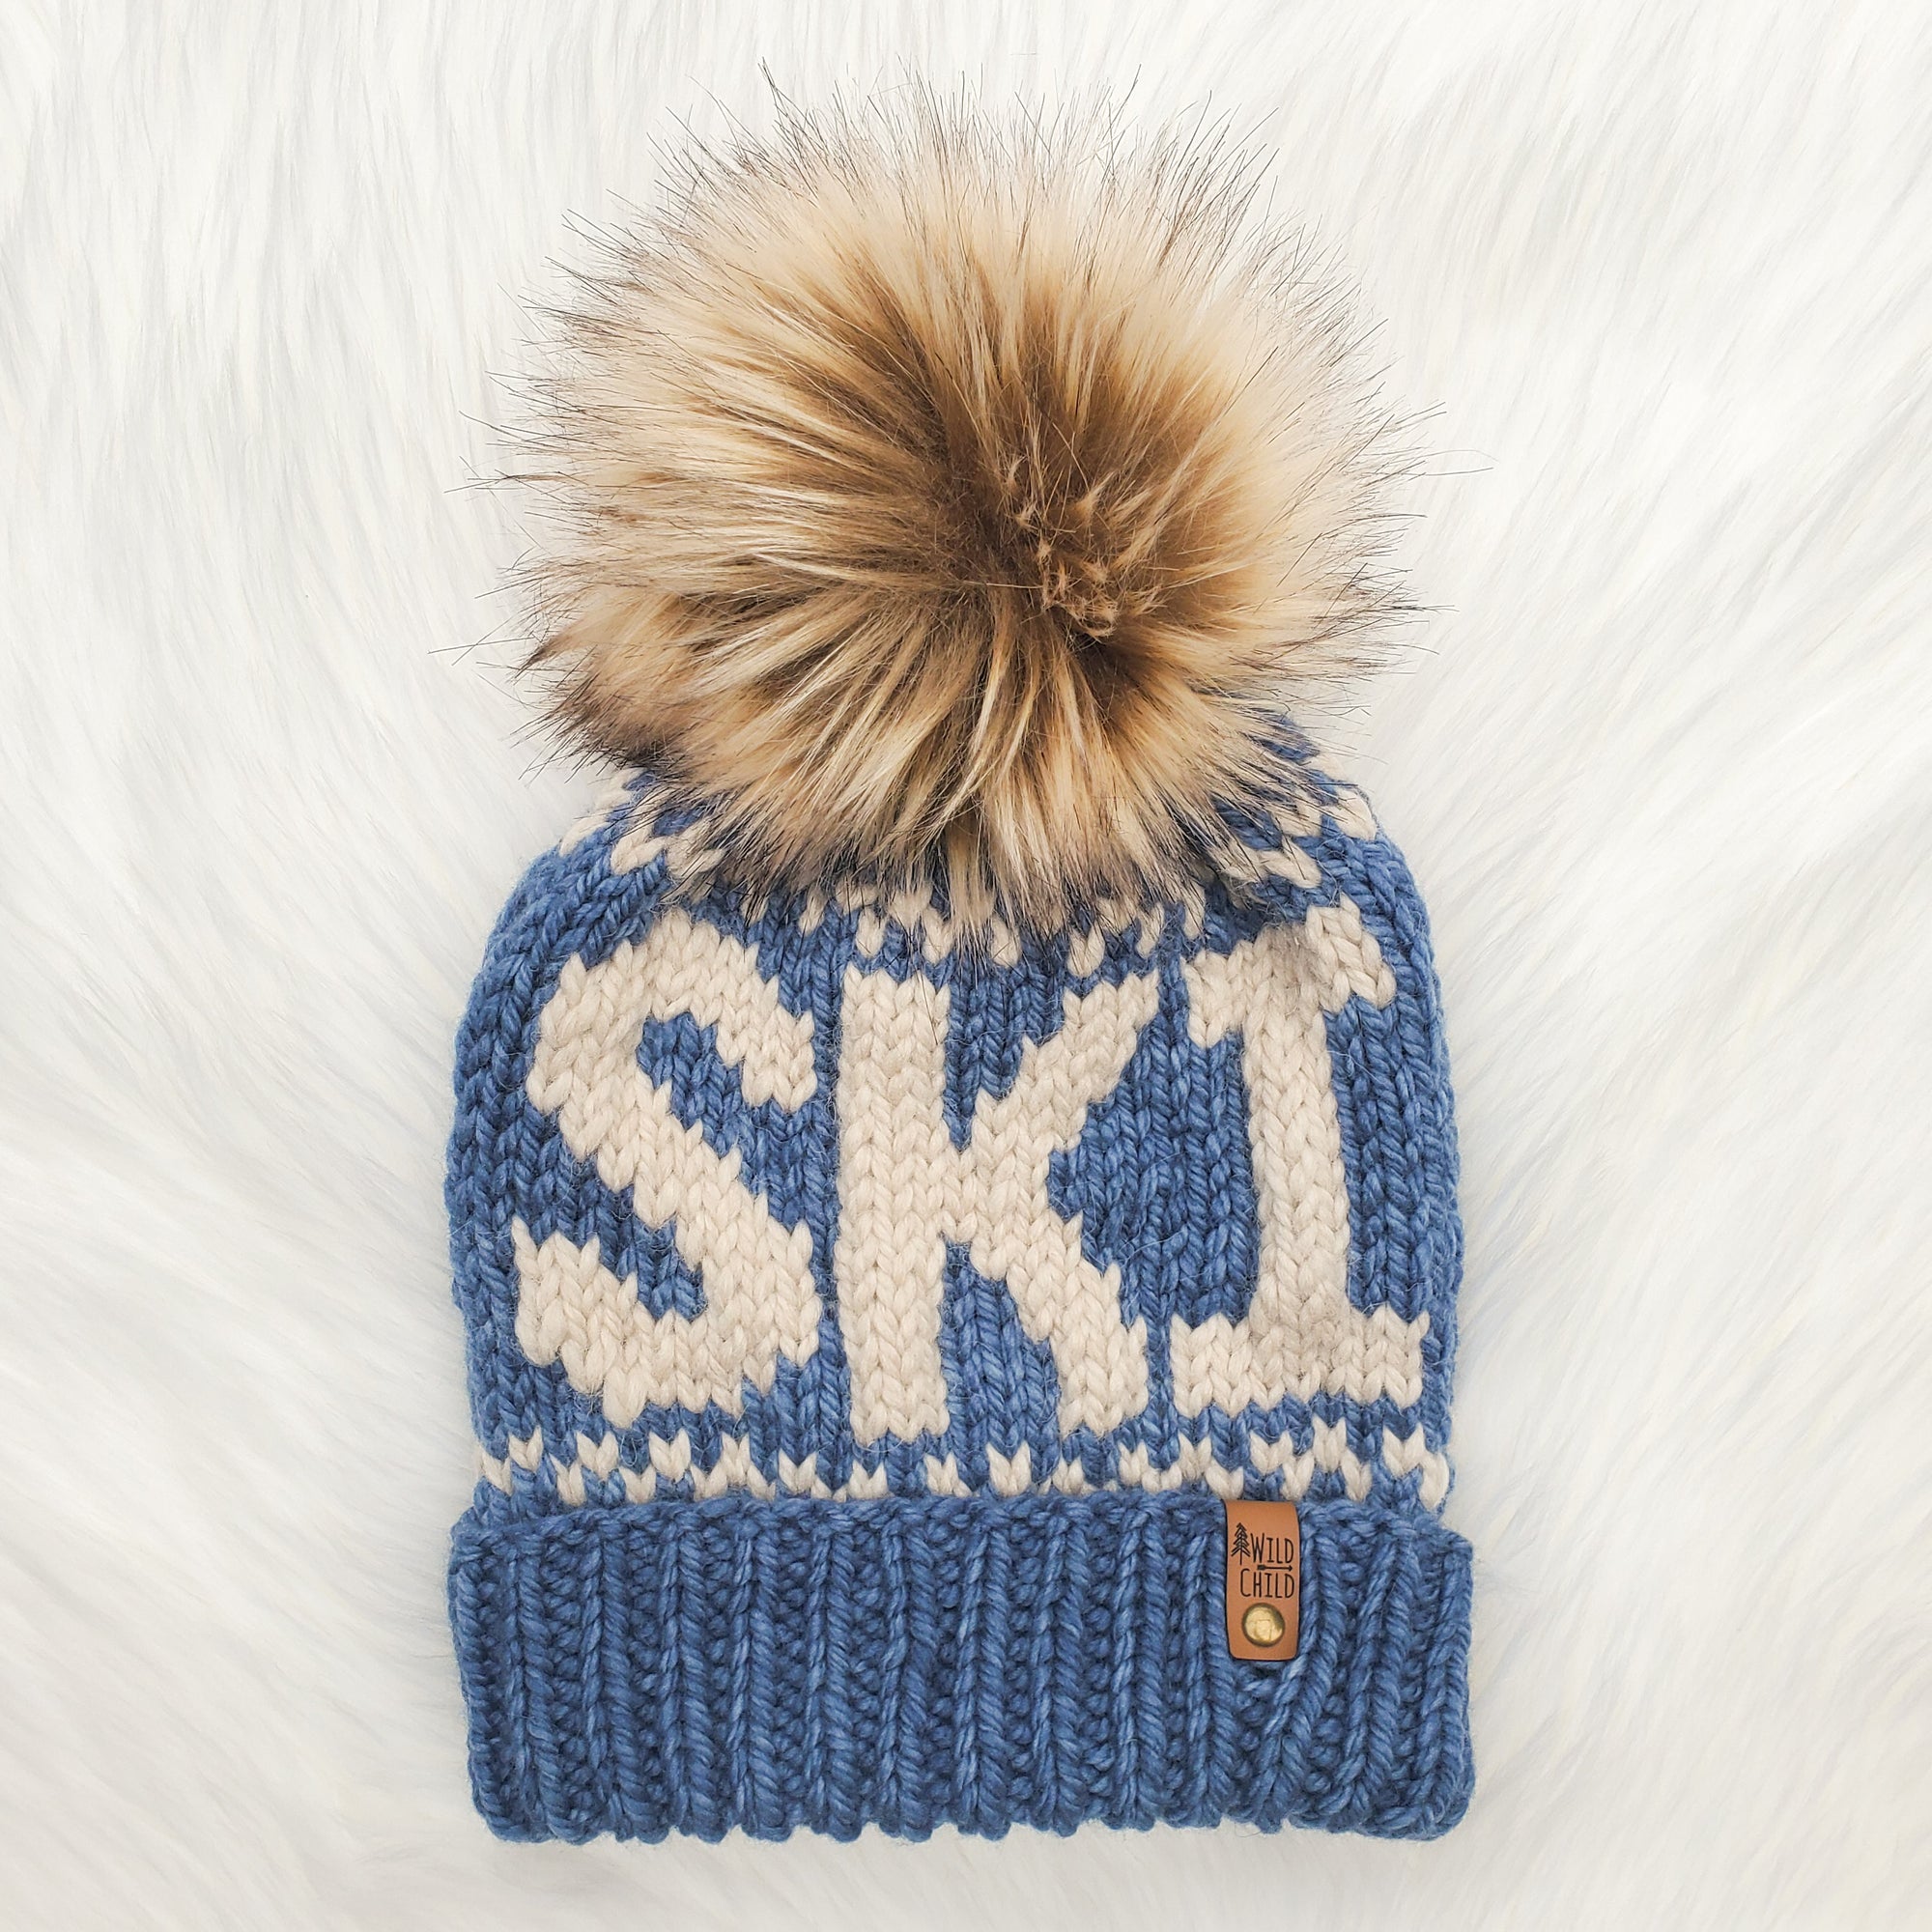 SKI Hat - Ready to Ship - Adult Size